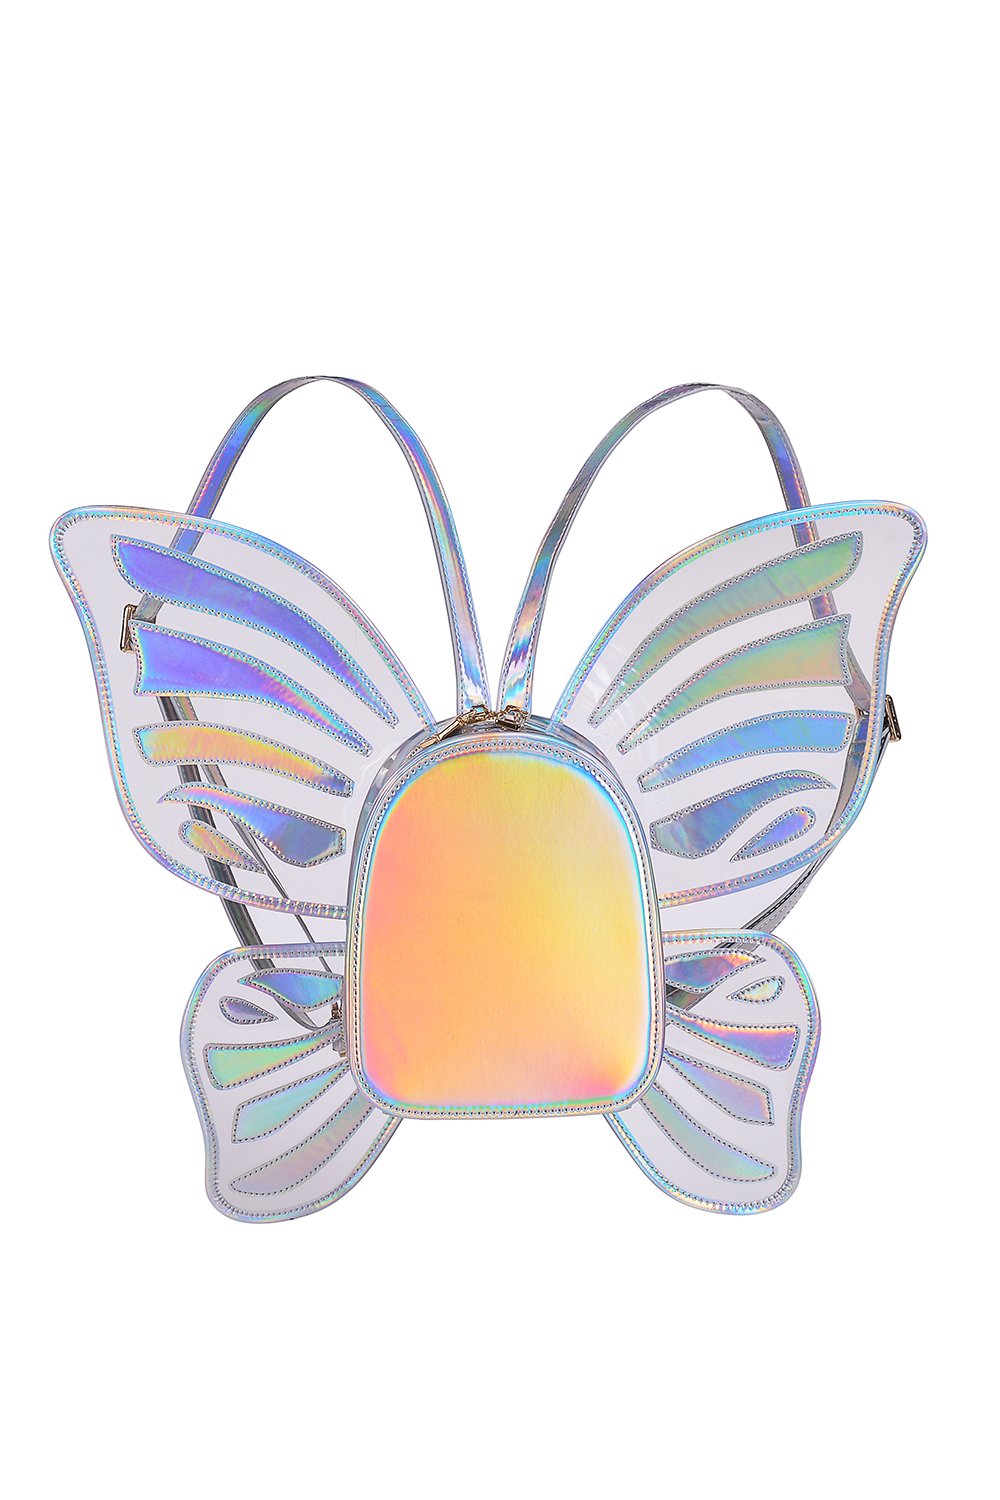 Festival Bag - Iridescent Butterfly Backpack